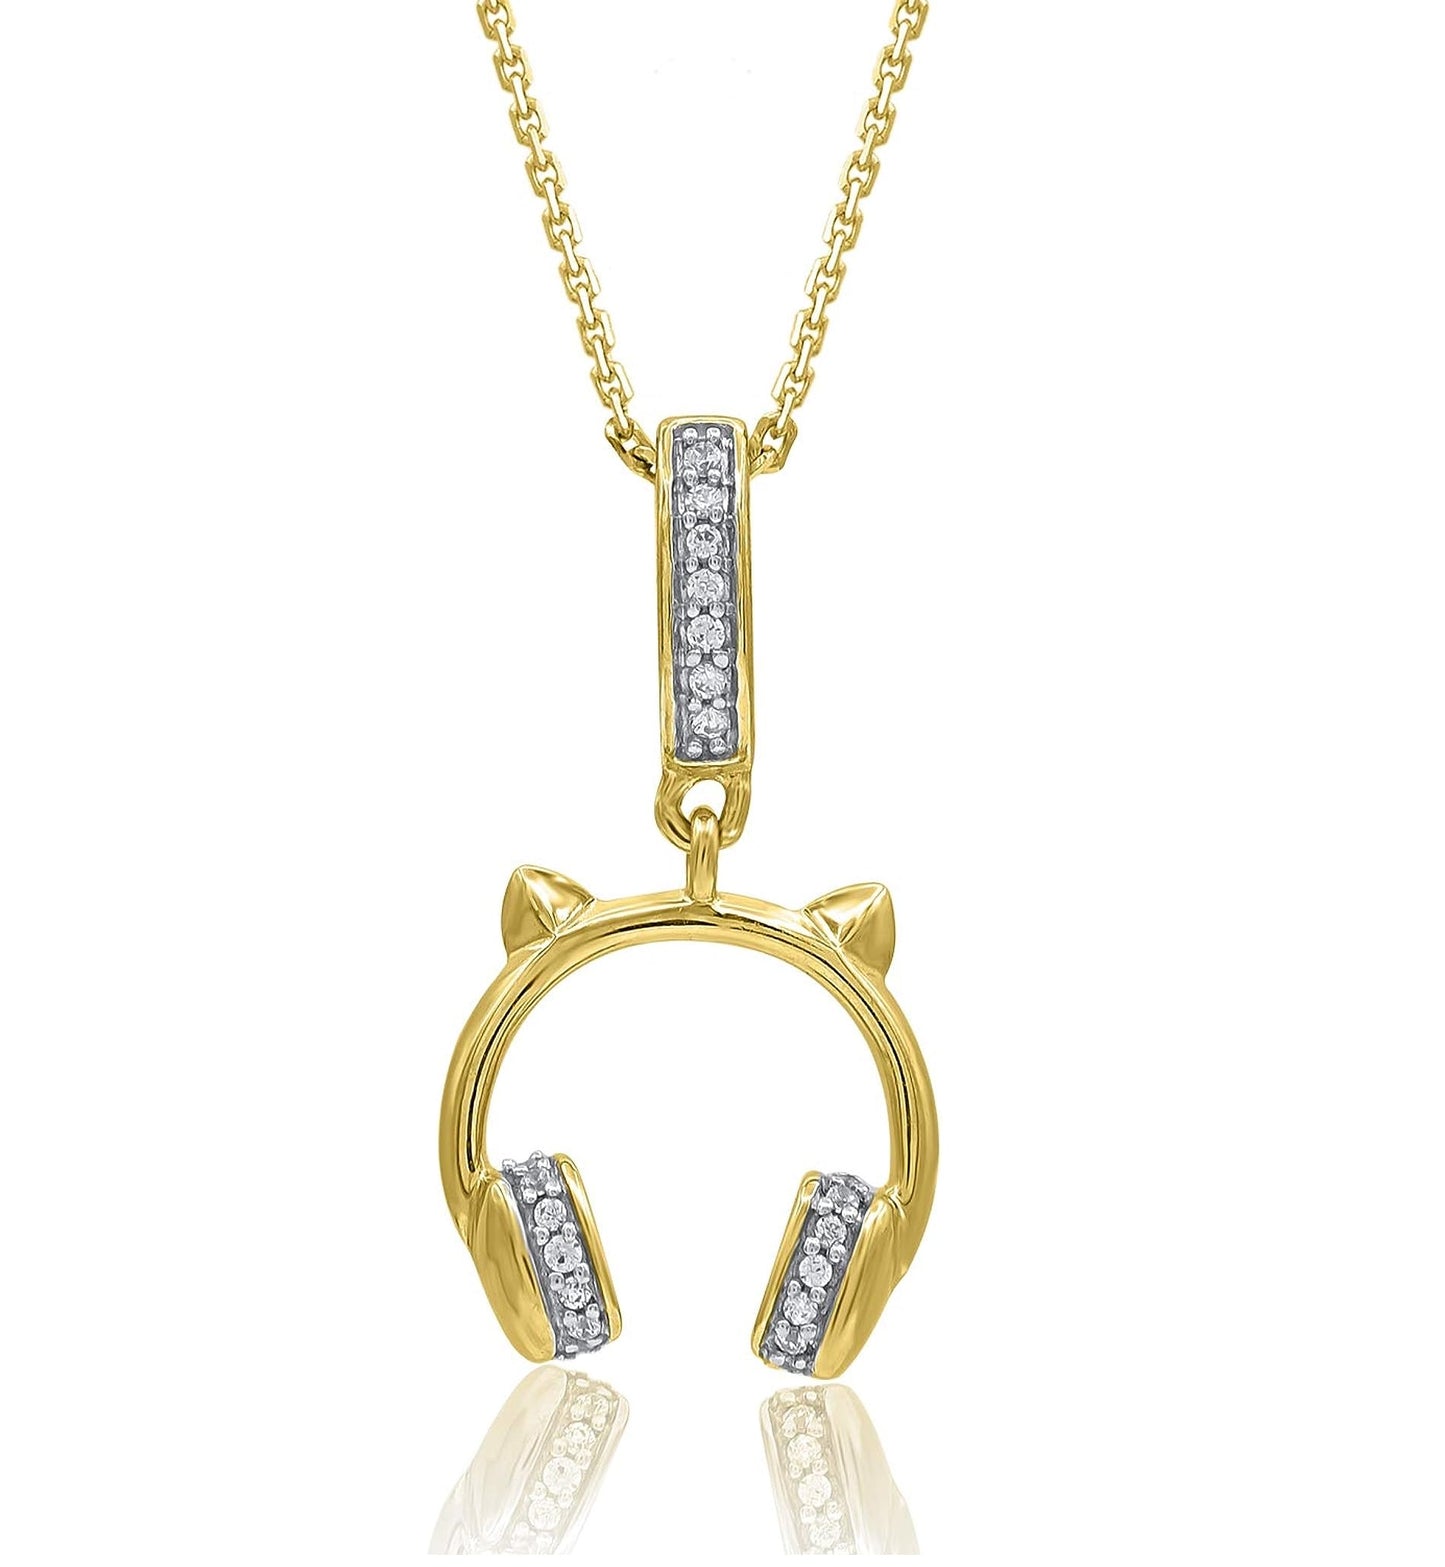 Kitty Cat Ear Headphone Pendant Necklace in 10k Gold